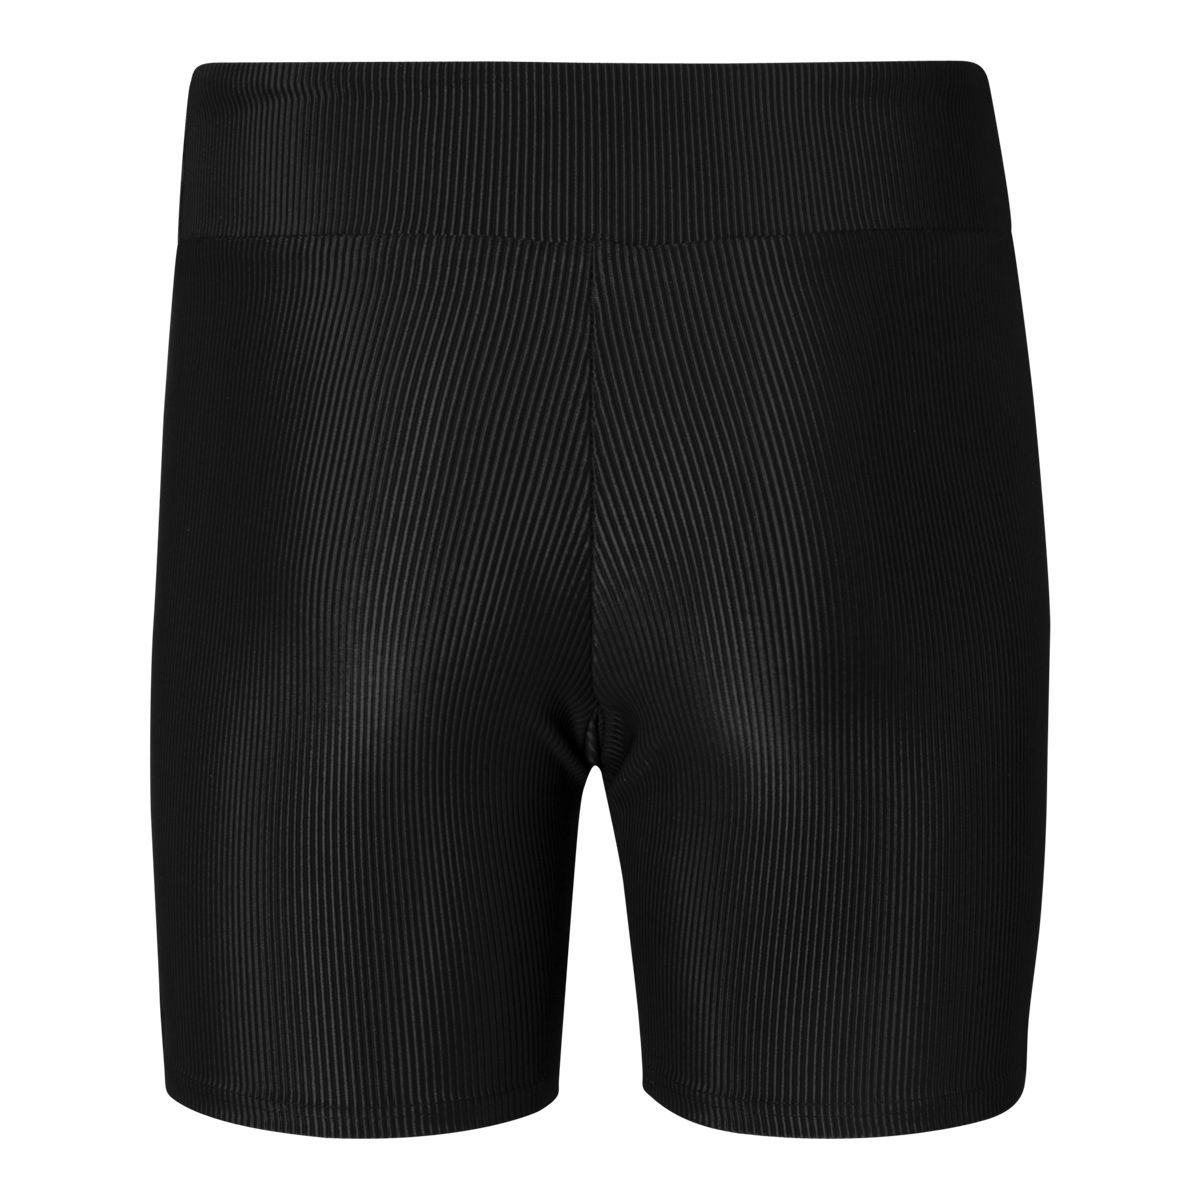 Onzie Girls' Black Rib Bike Shorts